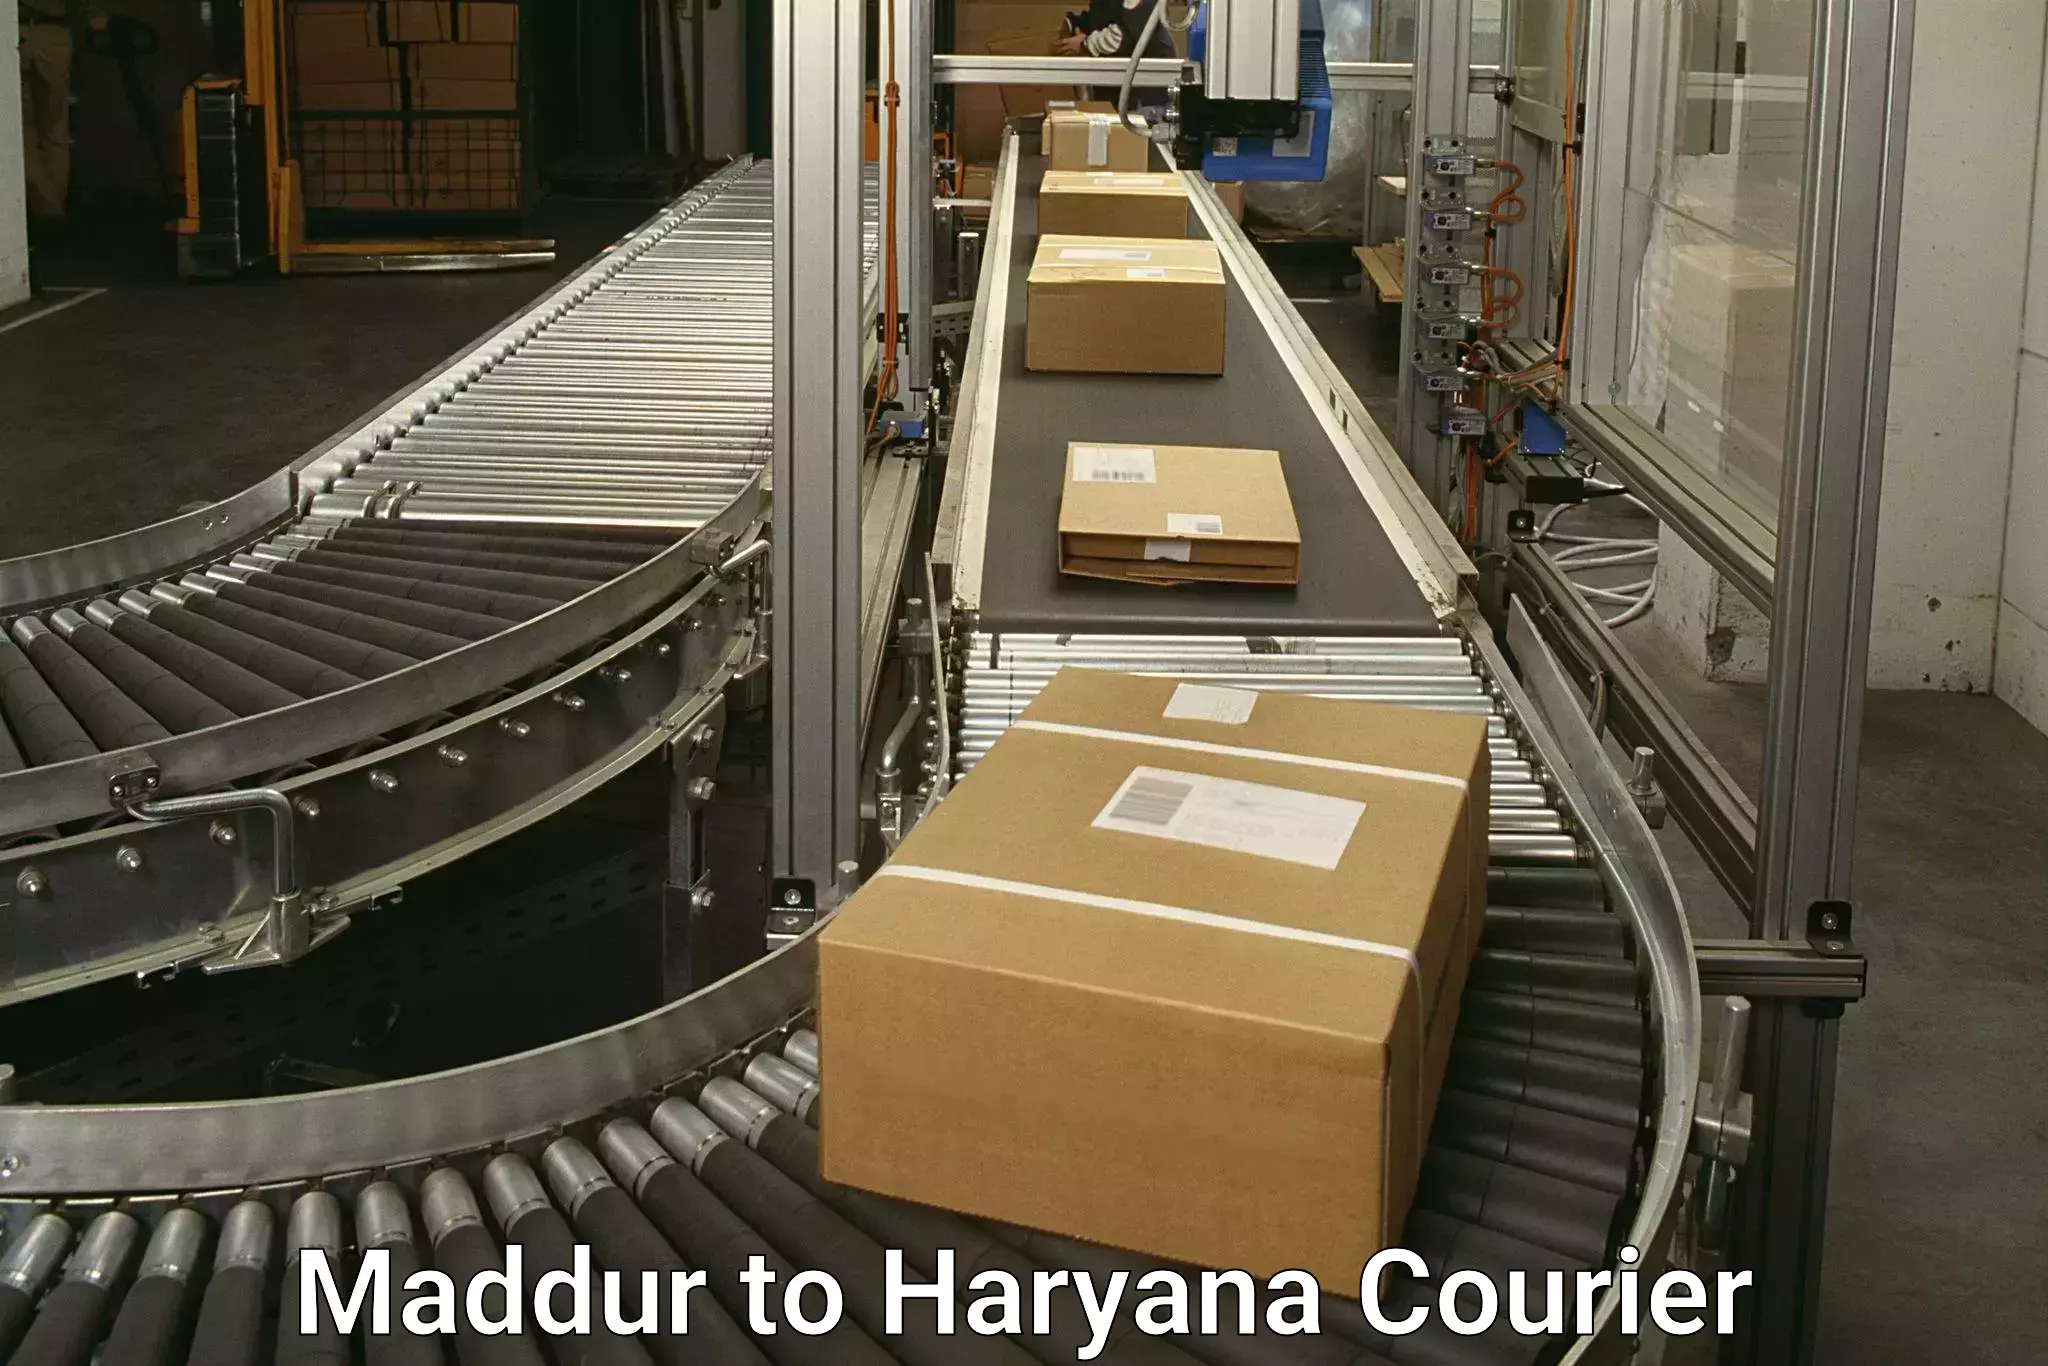 Tech-enabled shipping Maddur to Gurgaon